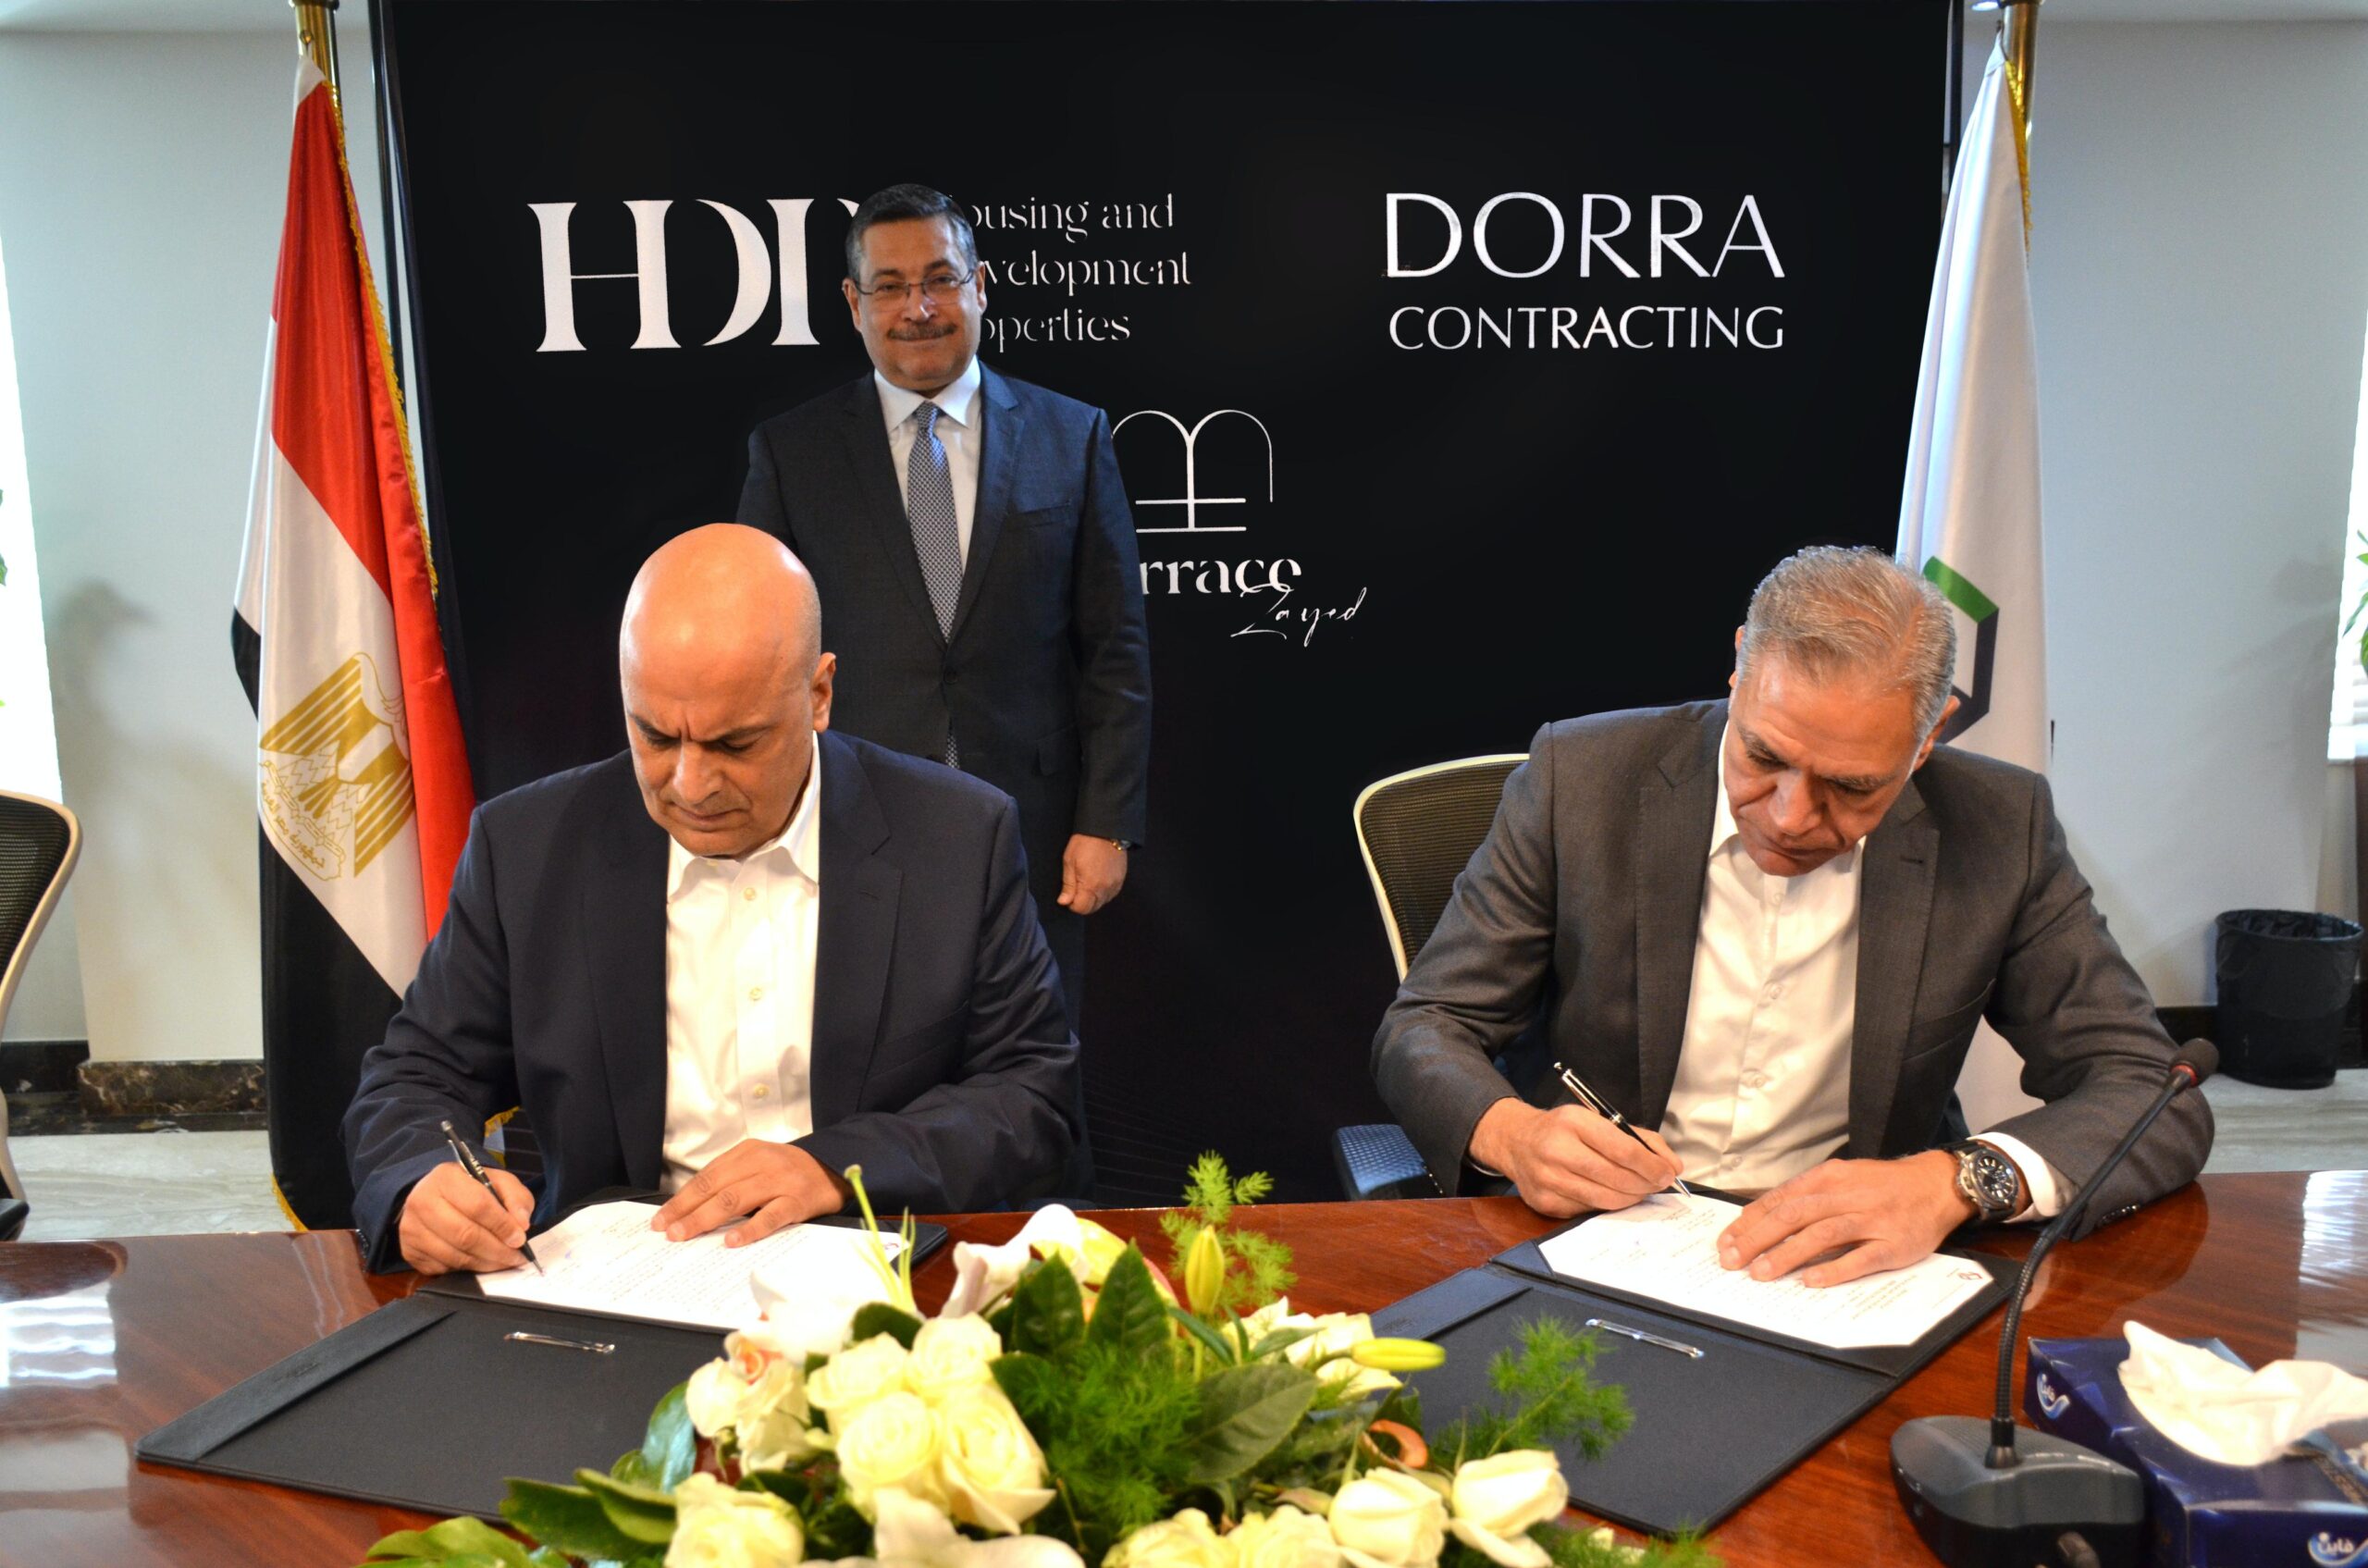 HDP توقع عقد مقاولات مع CRC-DORRA لتنفيذ أعمال إنشائية بـTerrace في الشيخ زايد